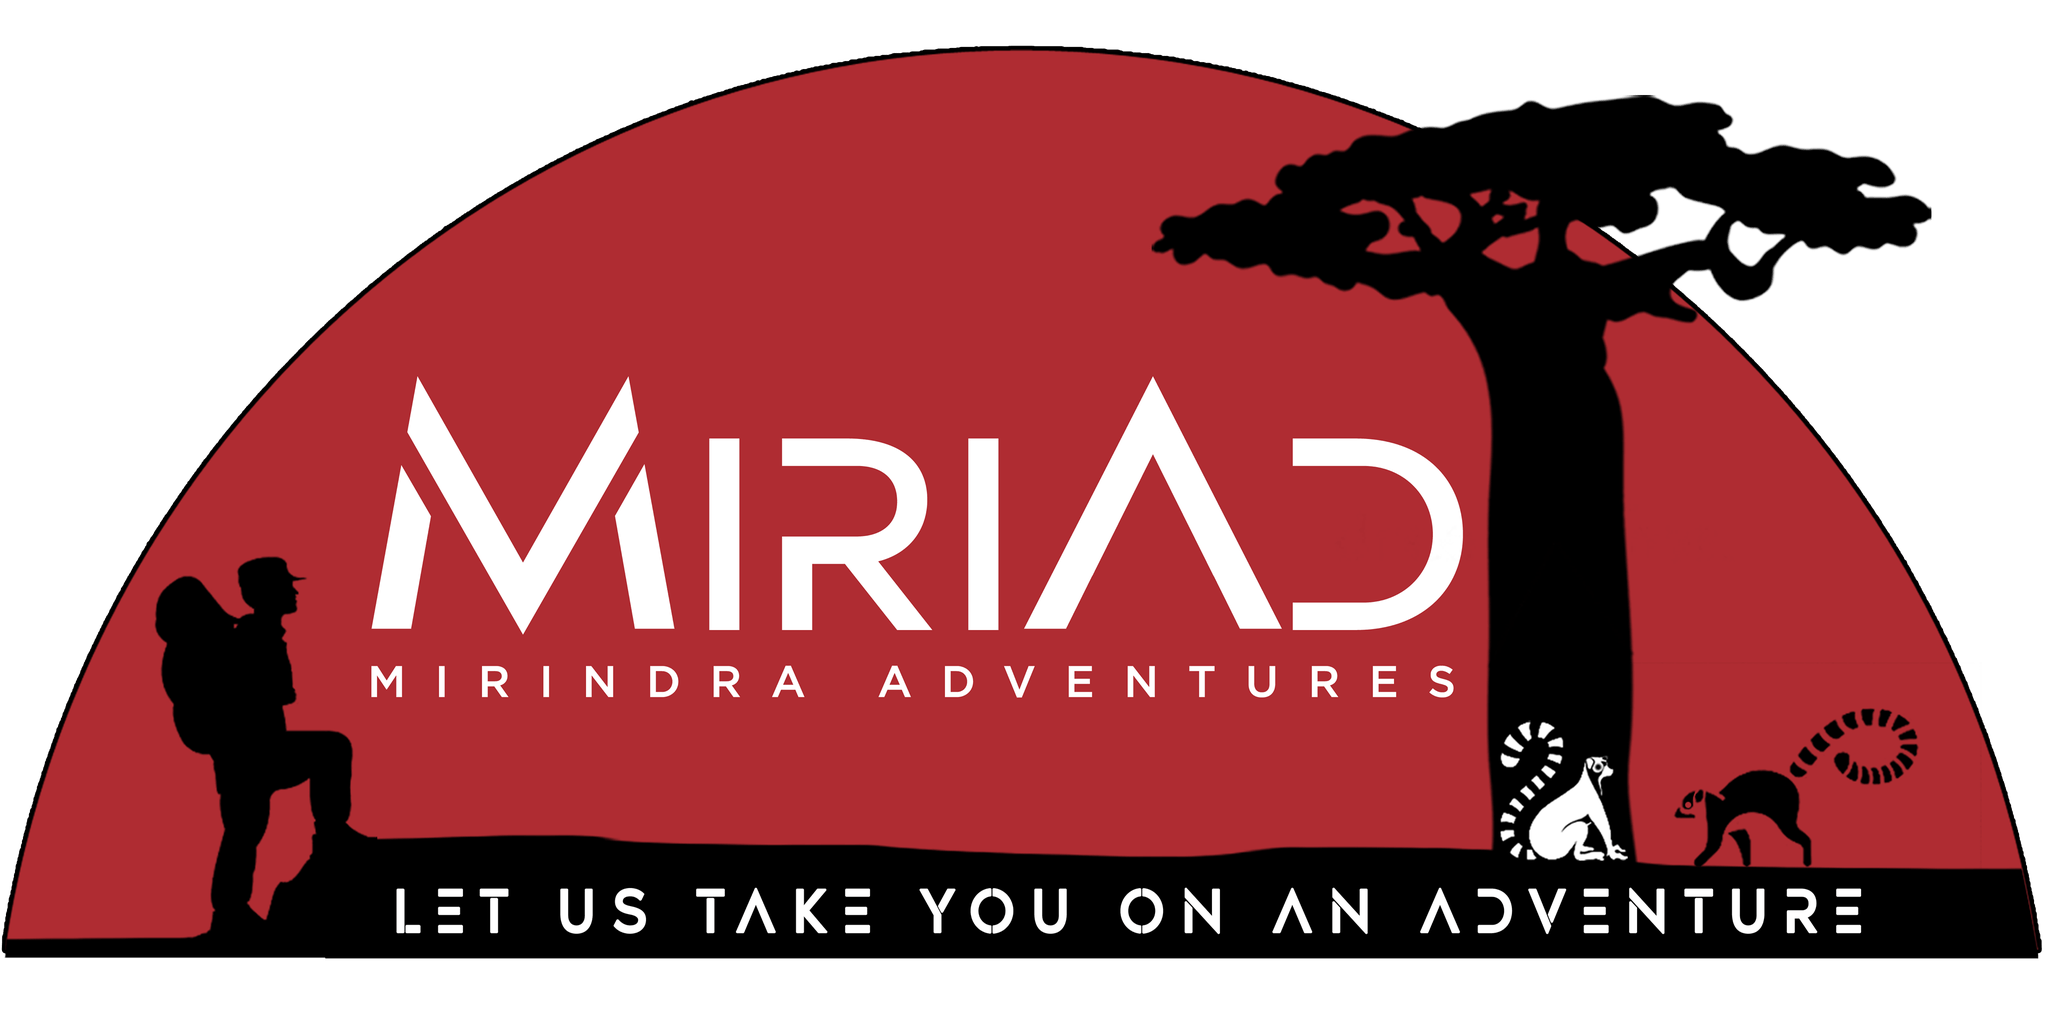 Mirindra Adventures